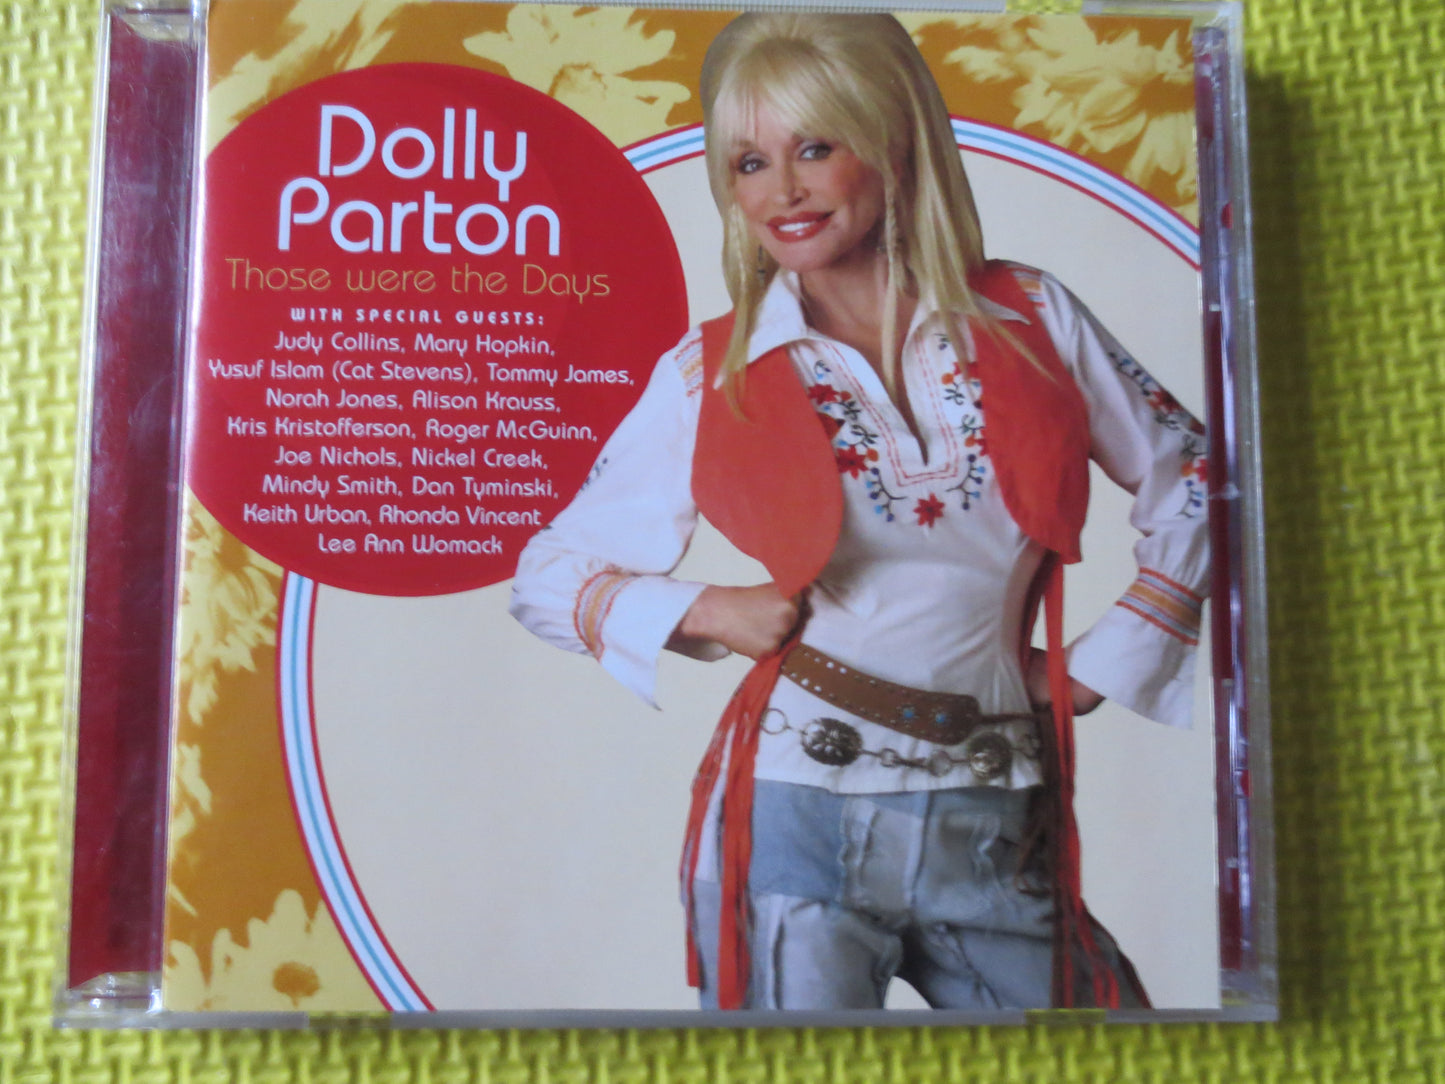 DOLLY PARTON, Those Were The Days, DOLLY Parton Cd, Classic Country Cd, Country Music Cd, Dolly Parton Album, Cds, Compact Disc